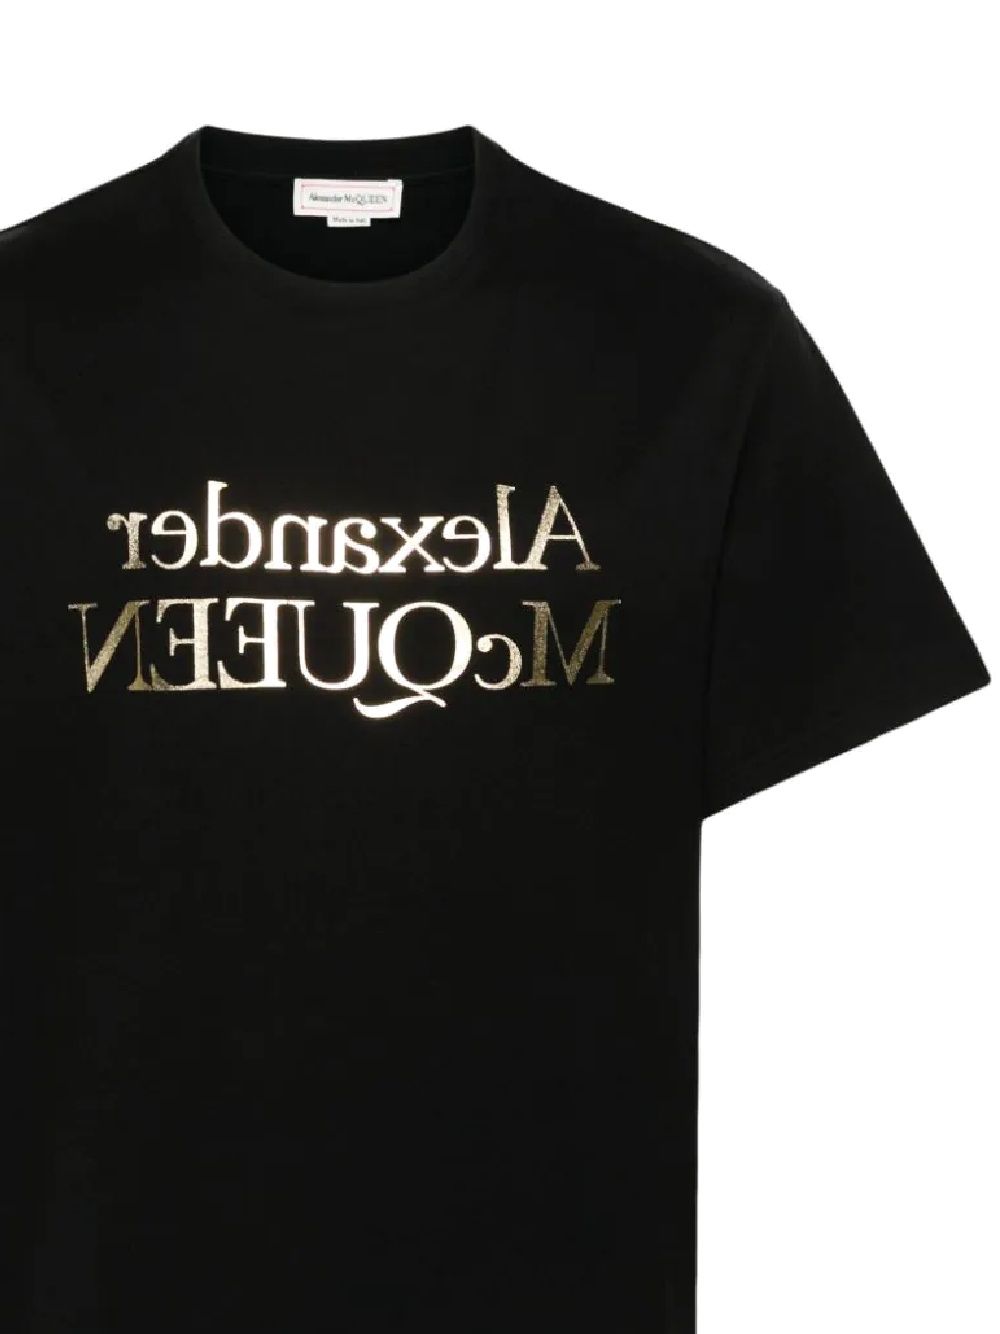 Alexander McQueen Black T-shirt and Polo